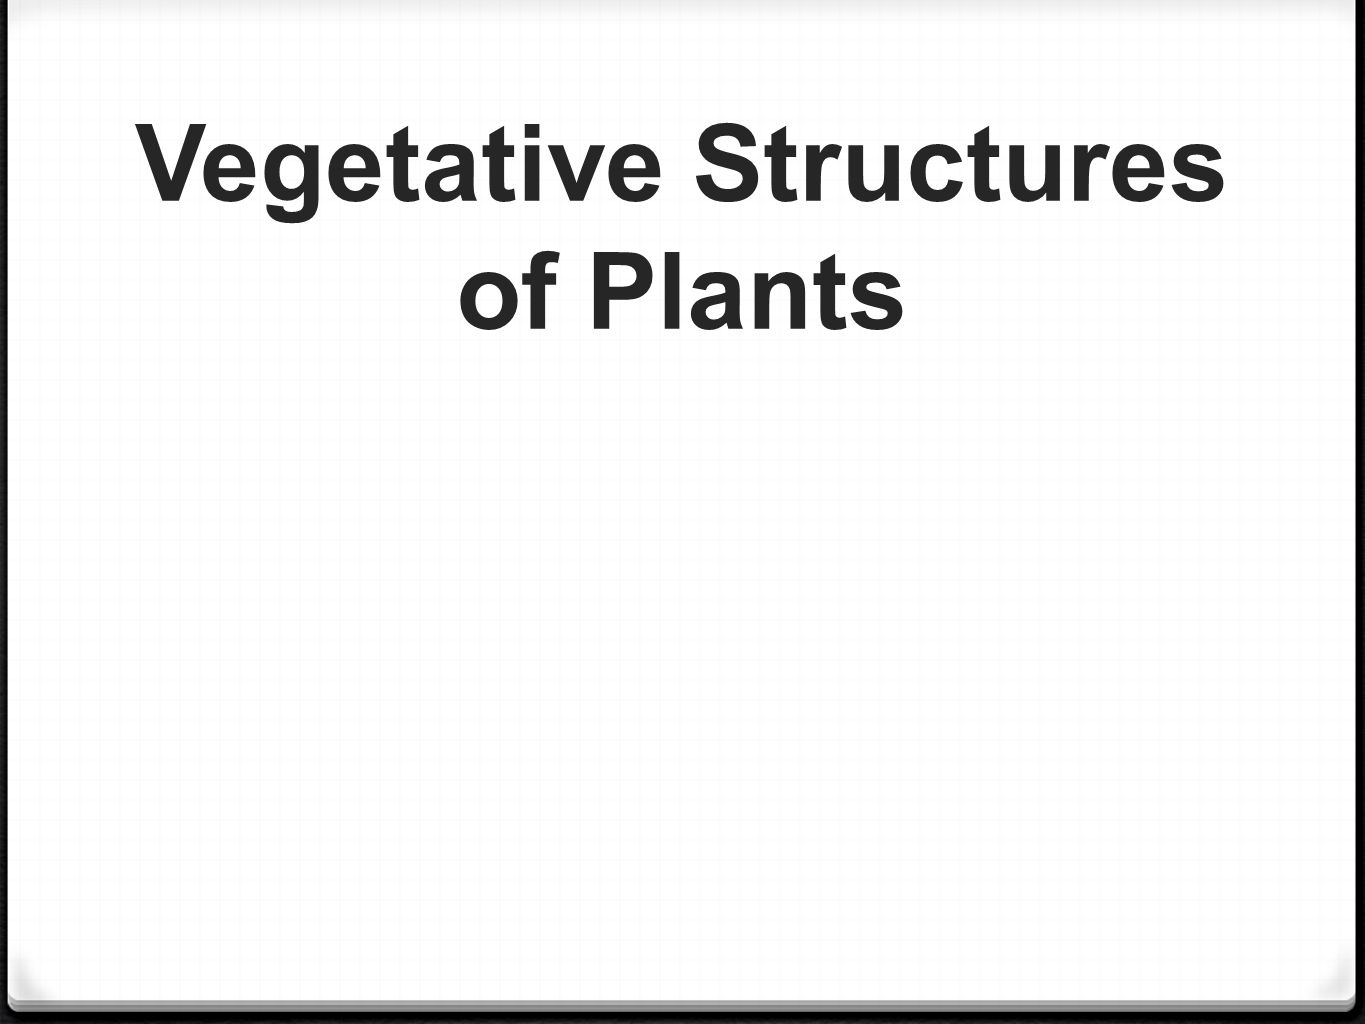 Vegetative Structures of Plants